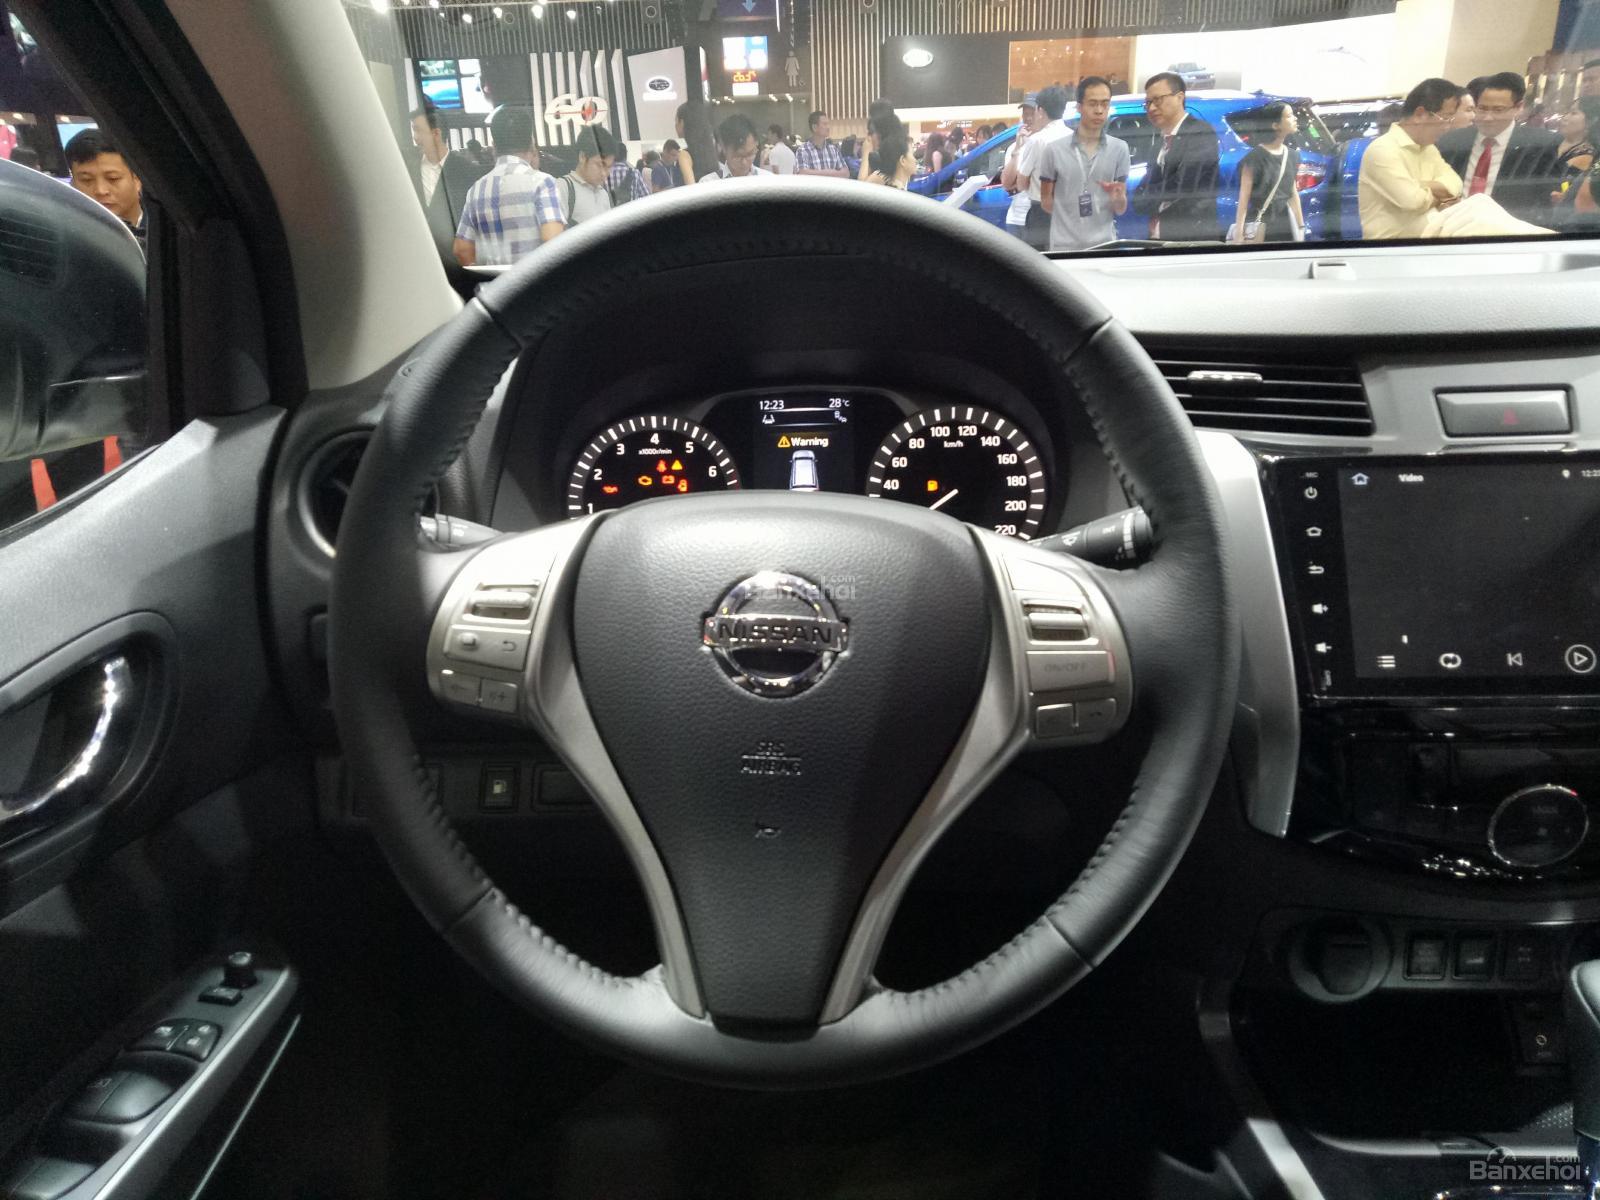 Ảnh chi tiết Nissan Terra tại triển lãm VMS 2018 a9